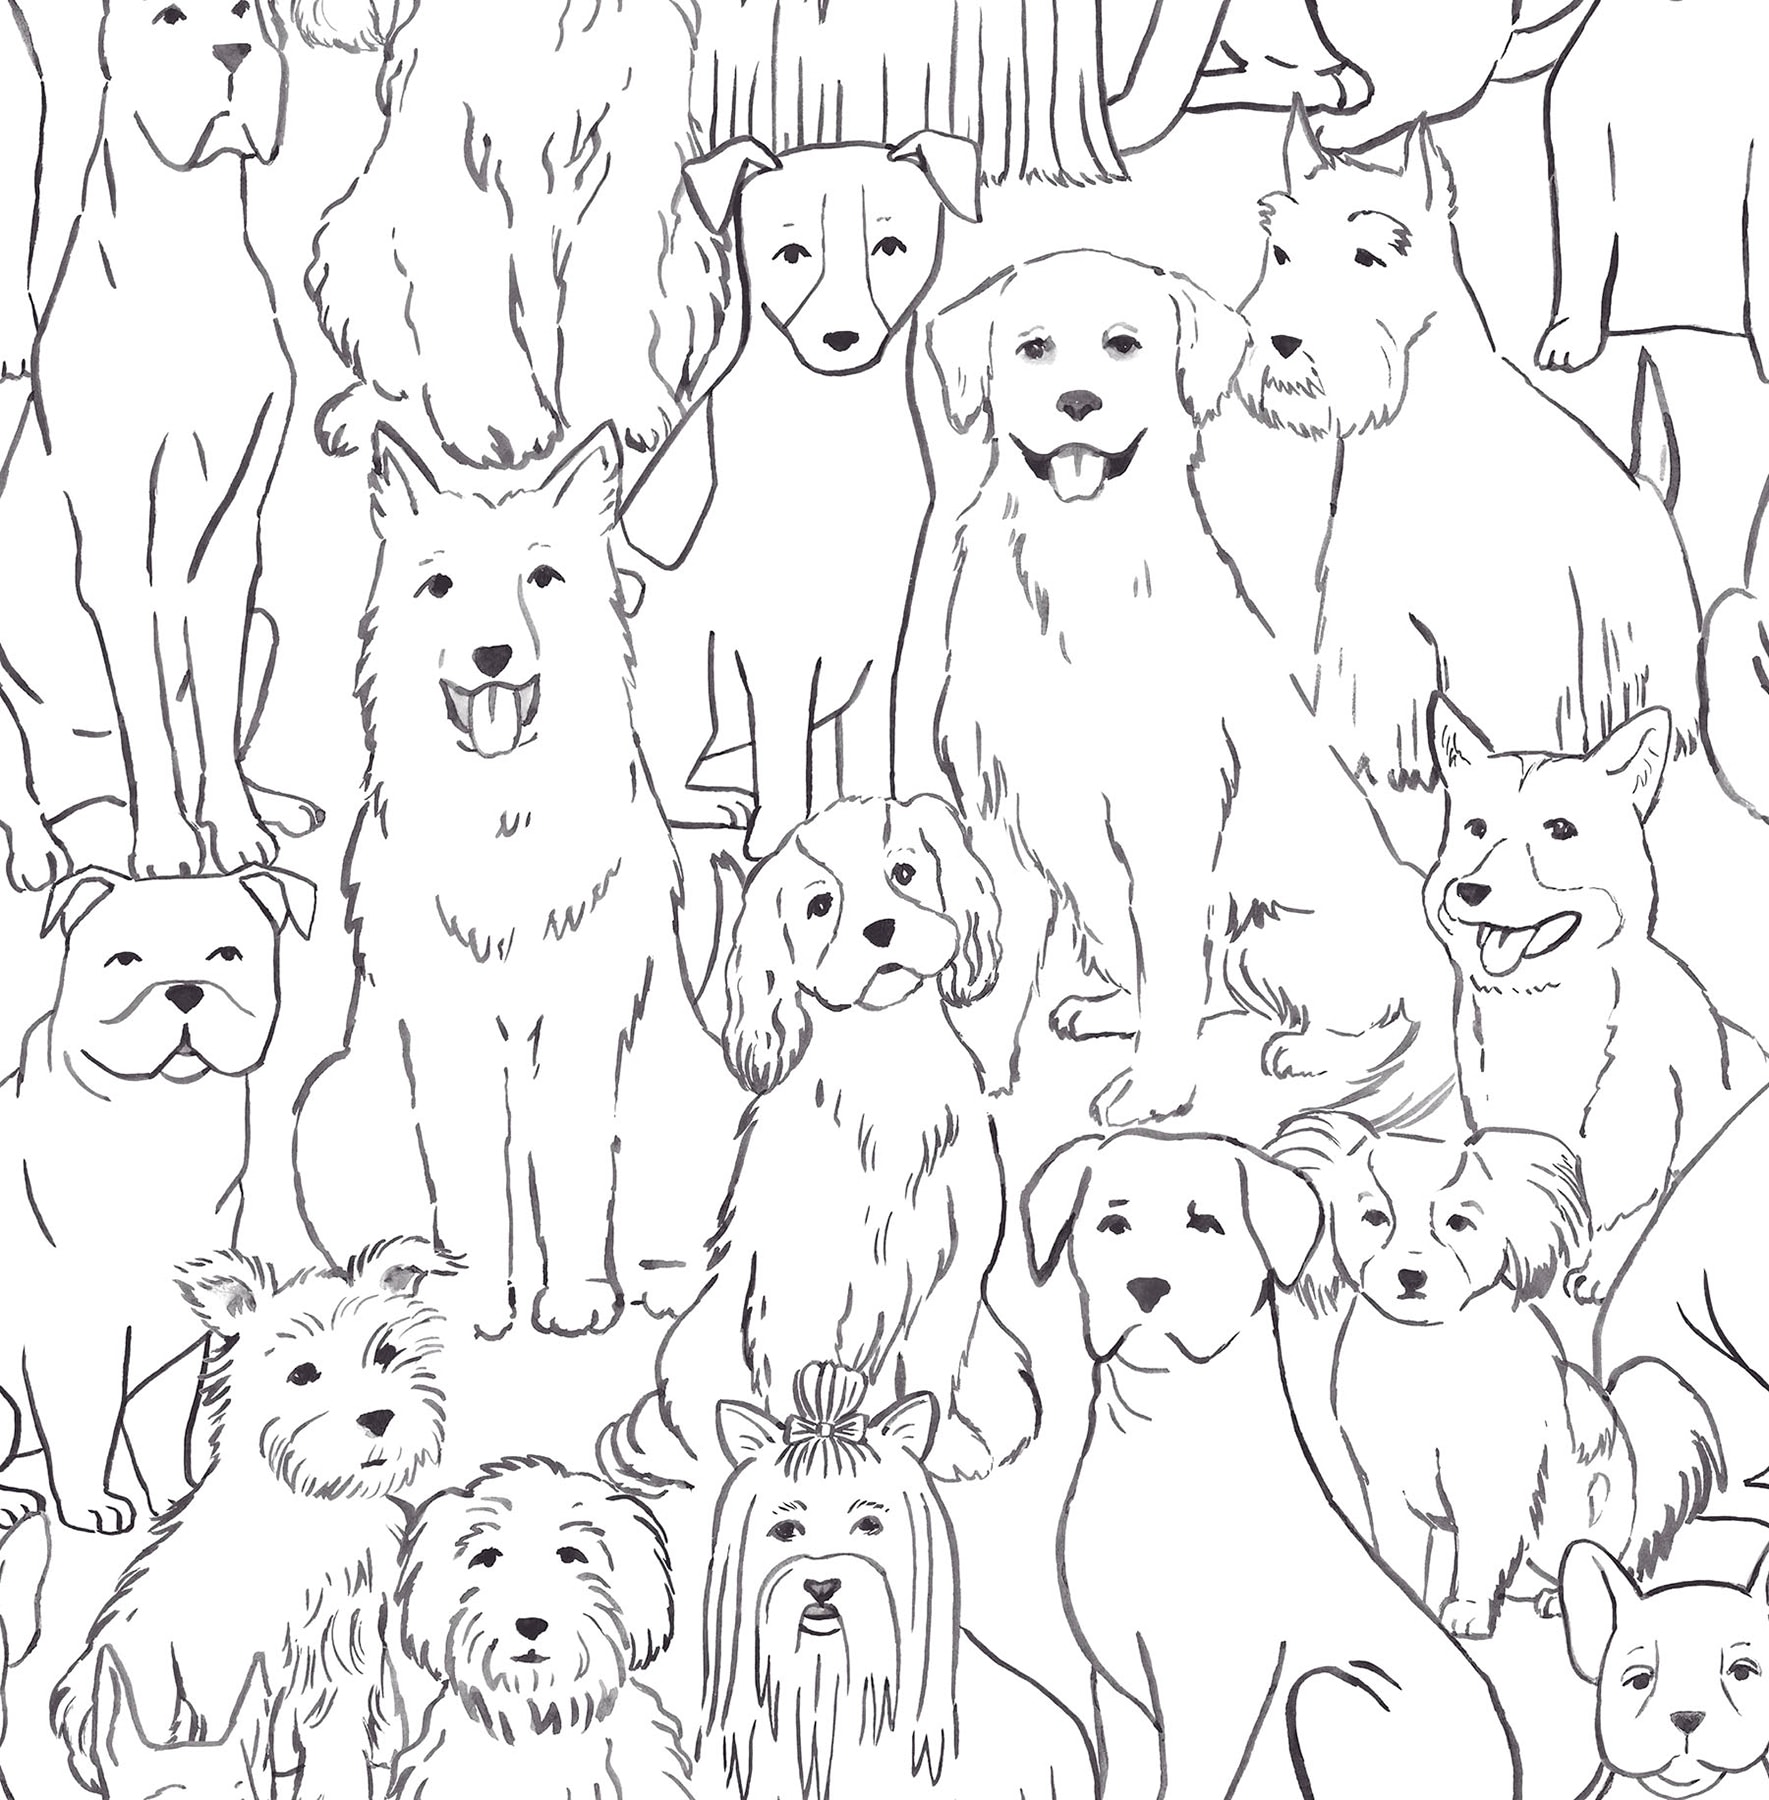 ArtzFolio Dogs Pug Puppies  Abstract Pattern Wallpaper Roll  Easy to   ArtzFoliocom